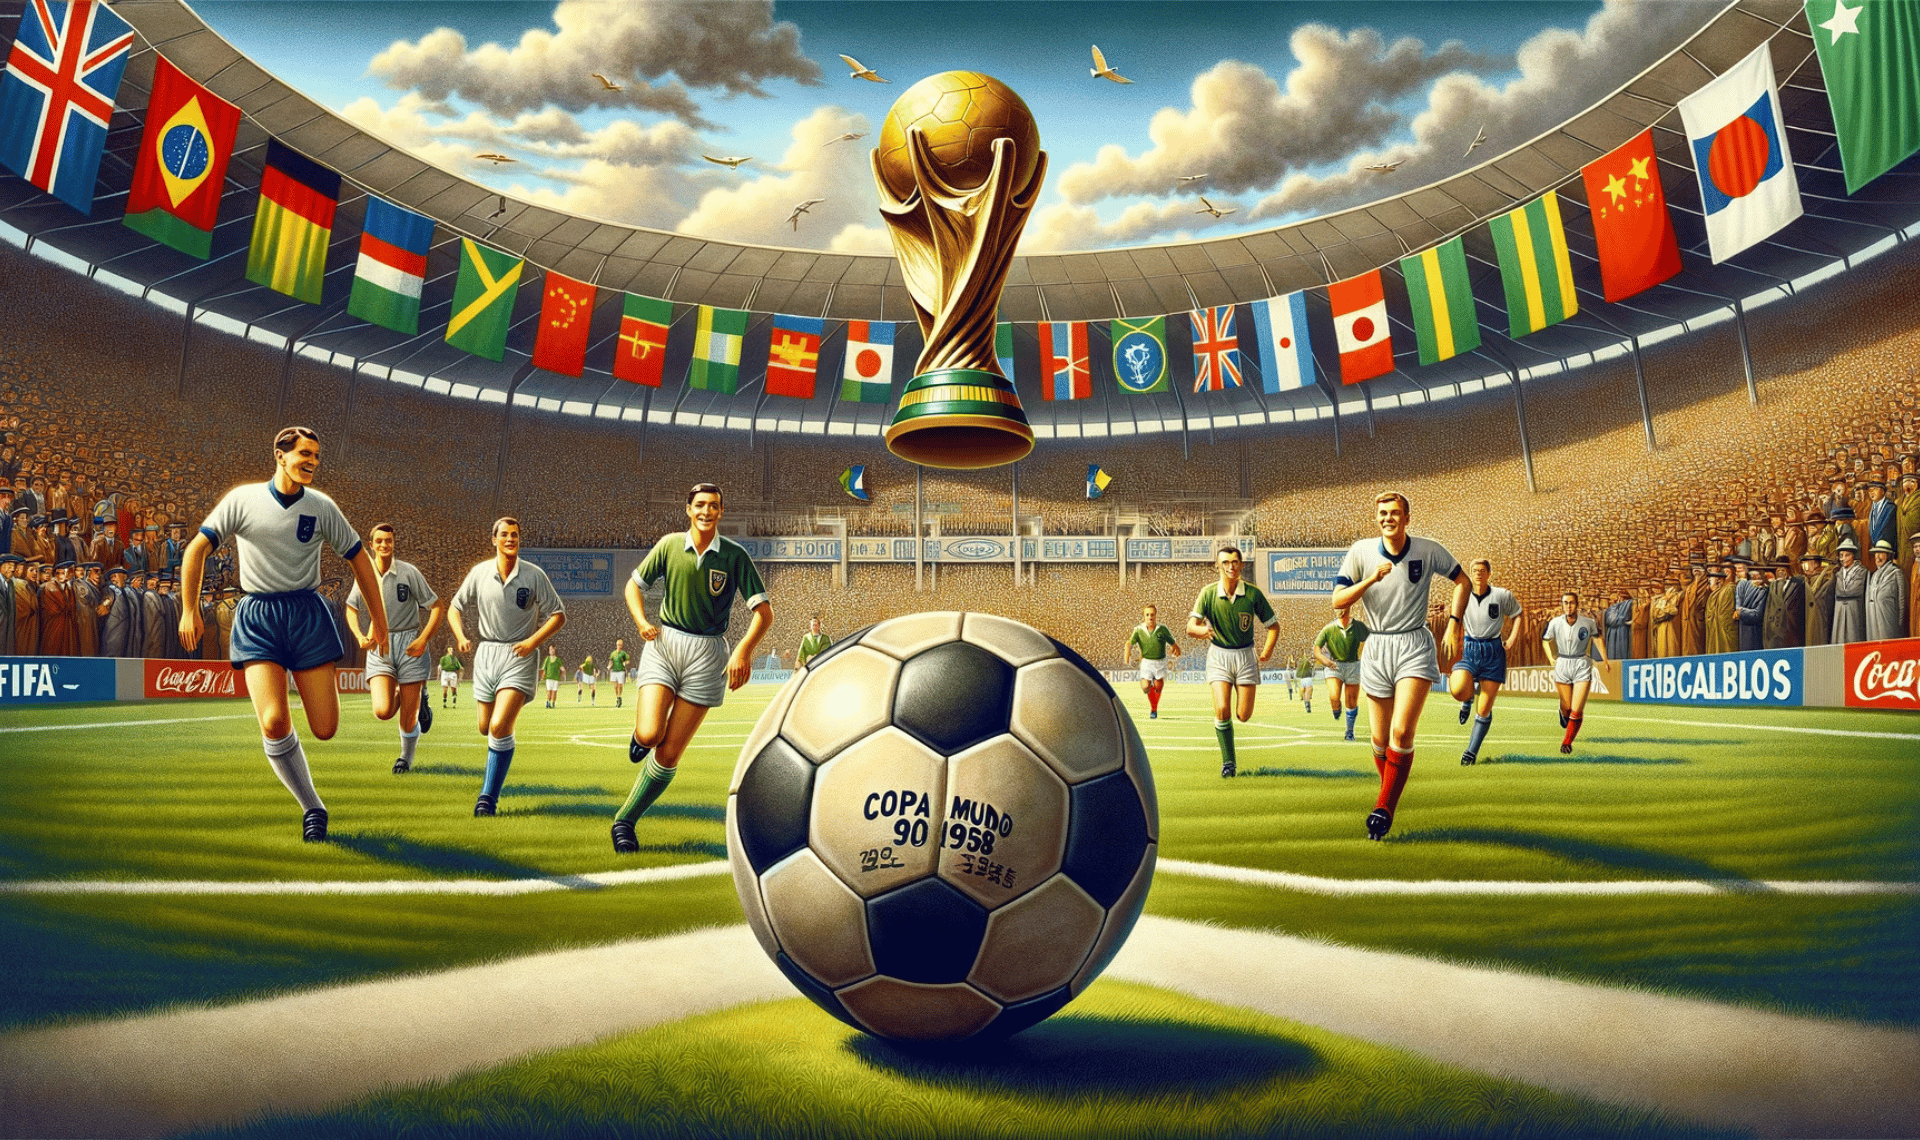 Copa do mundo novo formato de bola